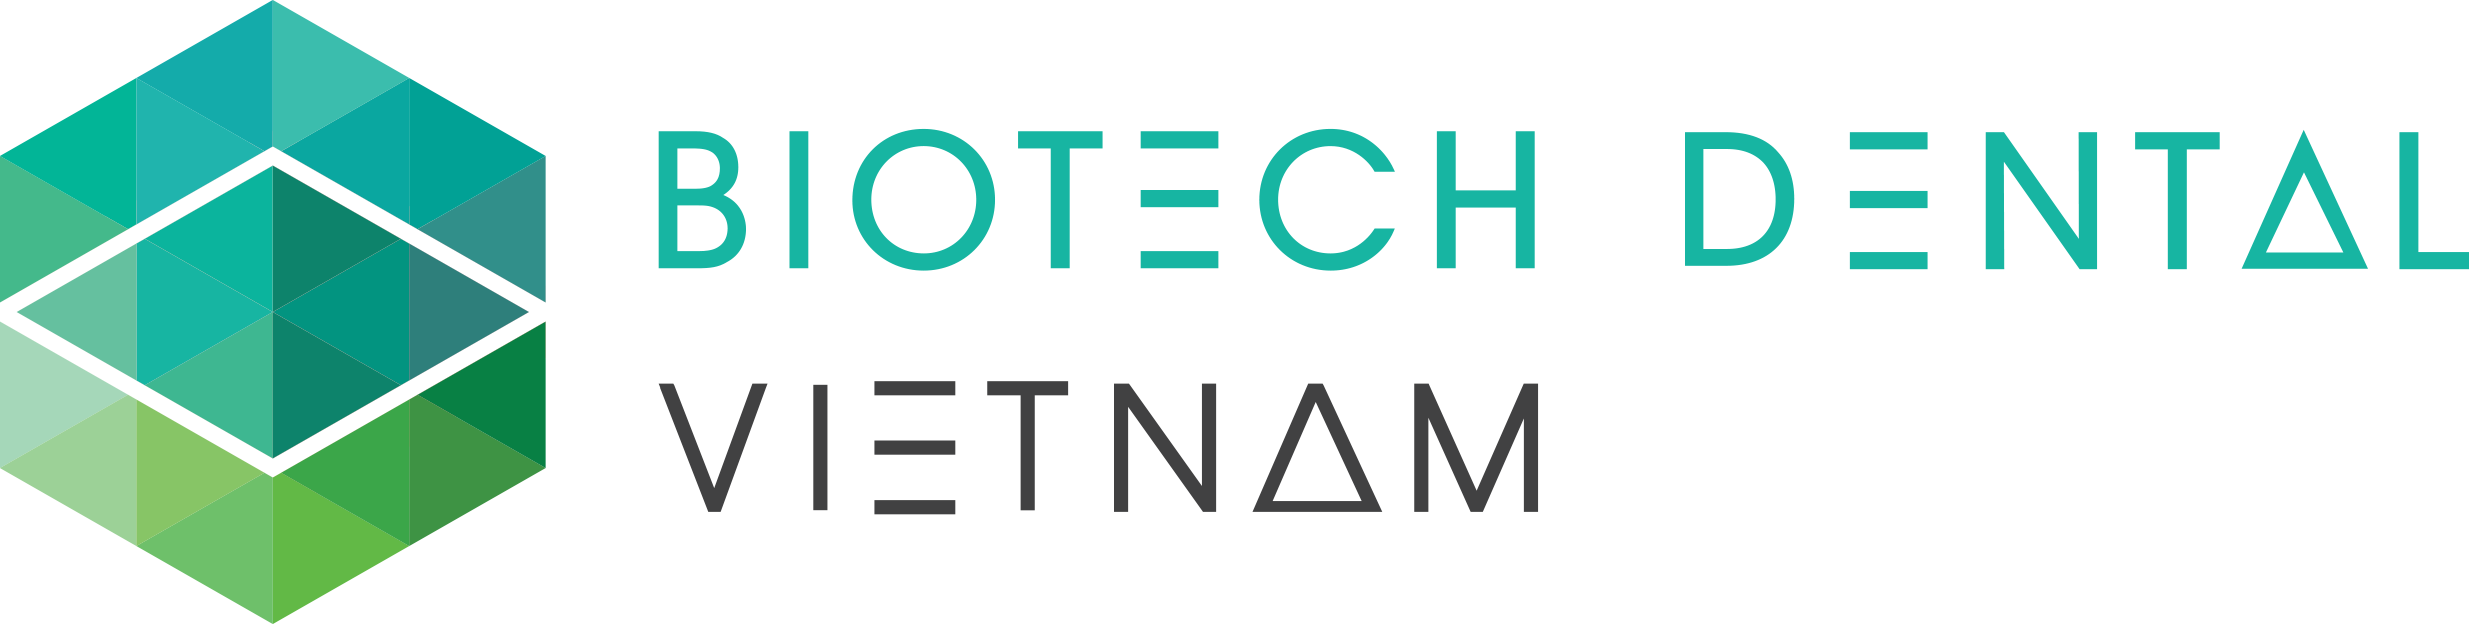 Biotech Dental Vietnam